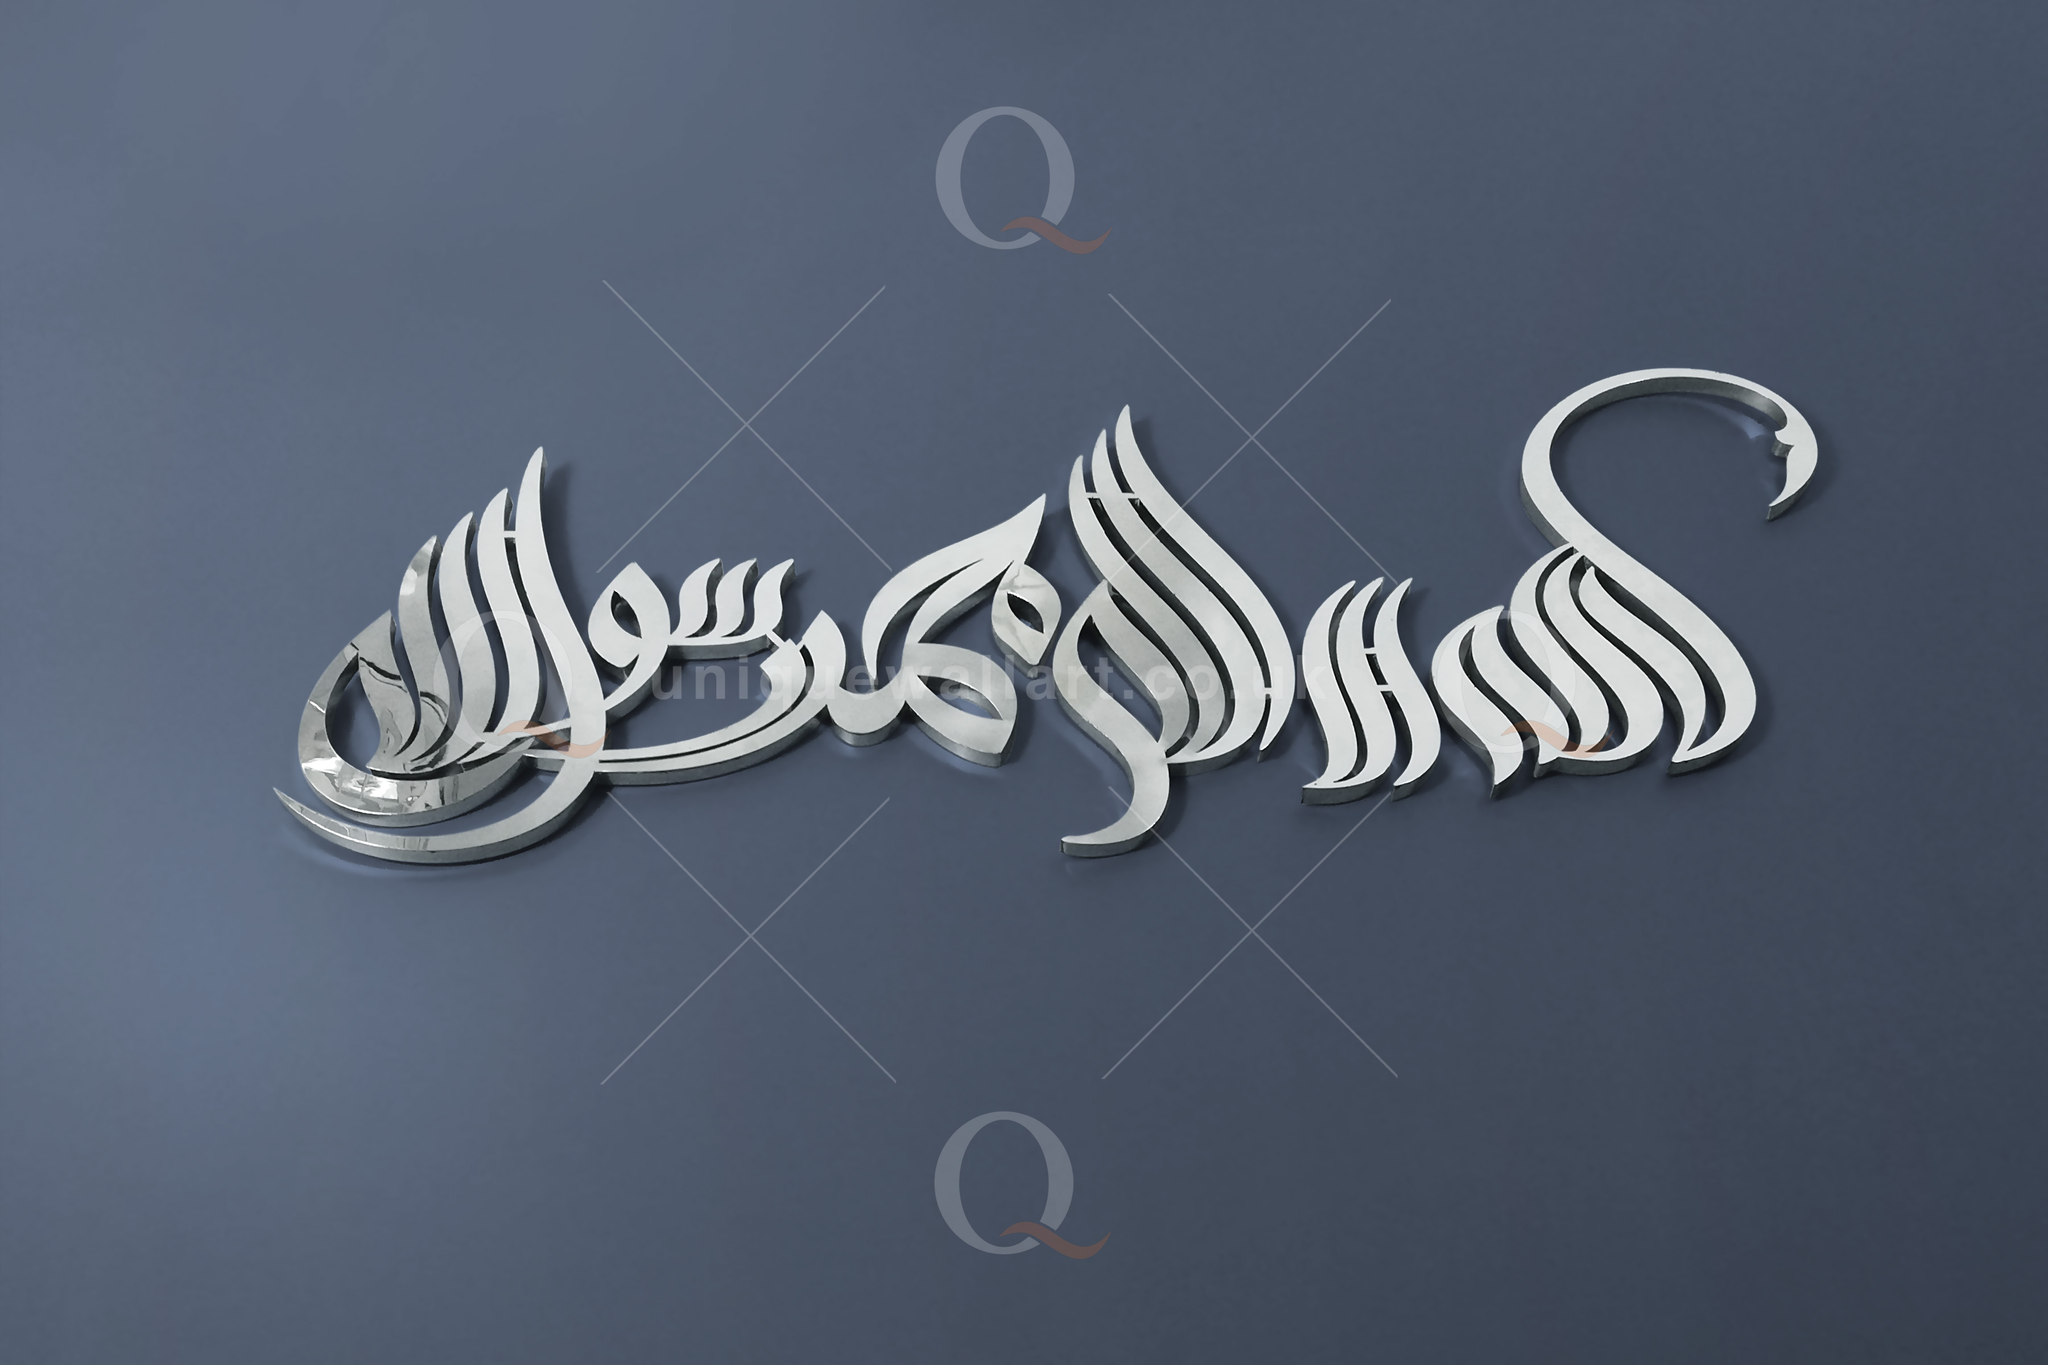 Shahada / Kalima Grand Modern Islamic Wall Art Calligraphy 3D Stainless Steel